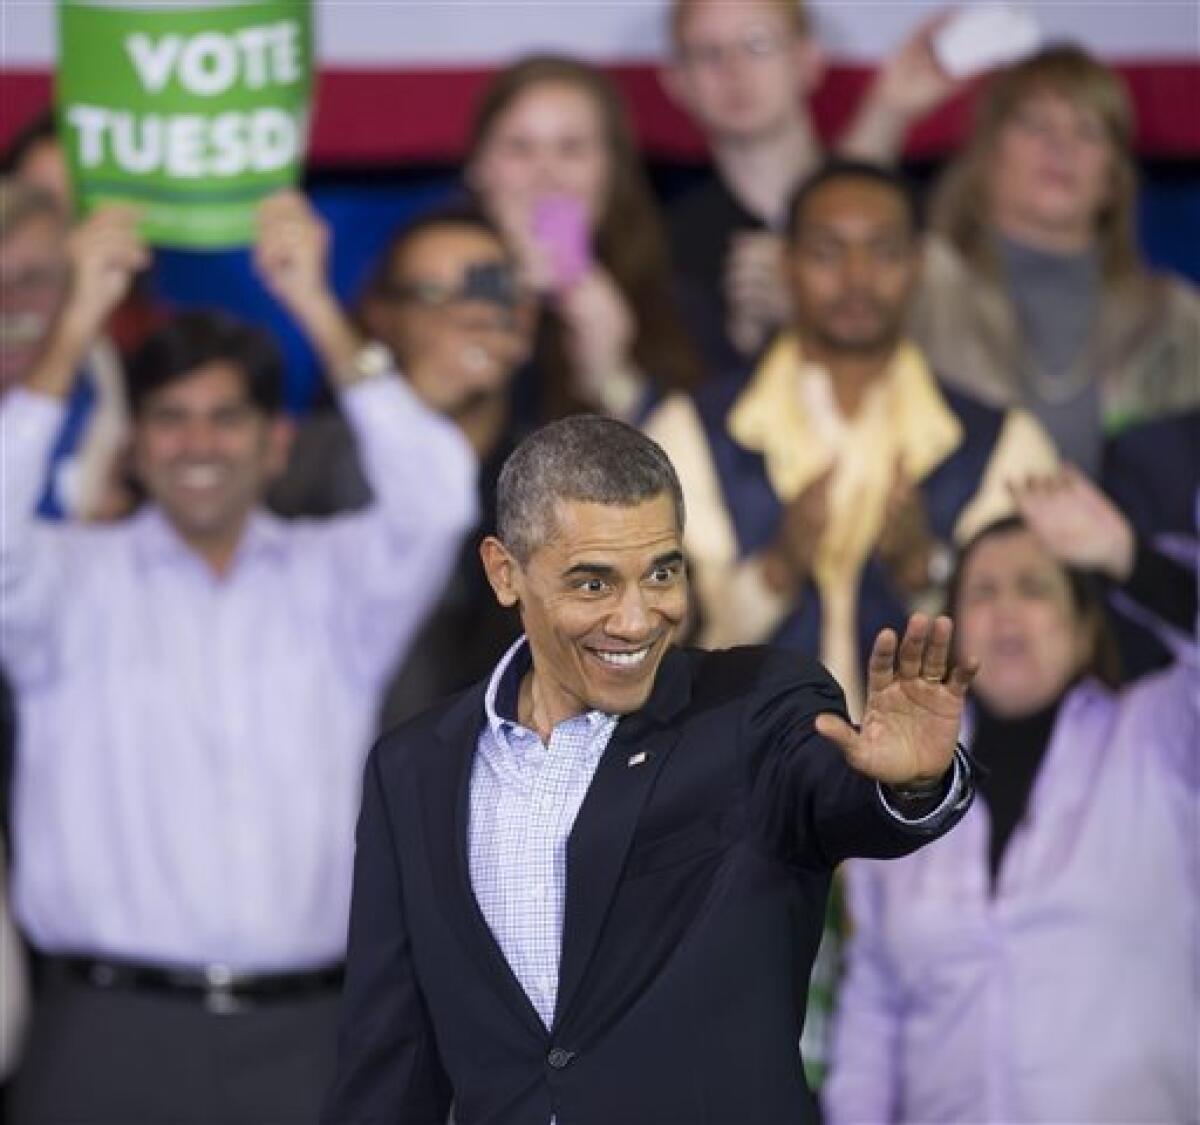 President Obama campaigns for Virginia Democratic gubernatorial candidate Terry McAuliffe in Arlington, Va.